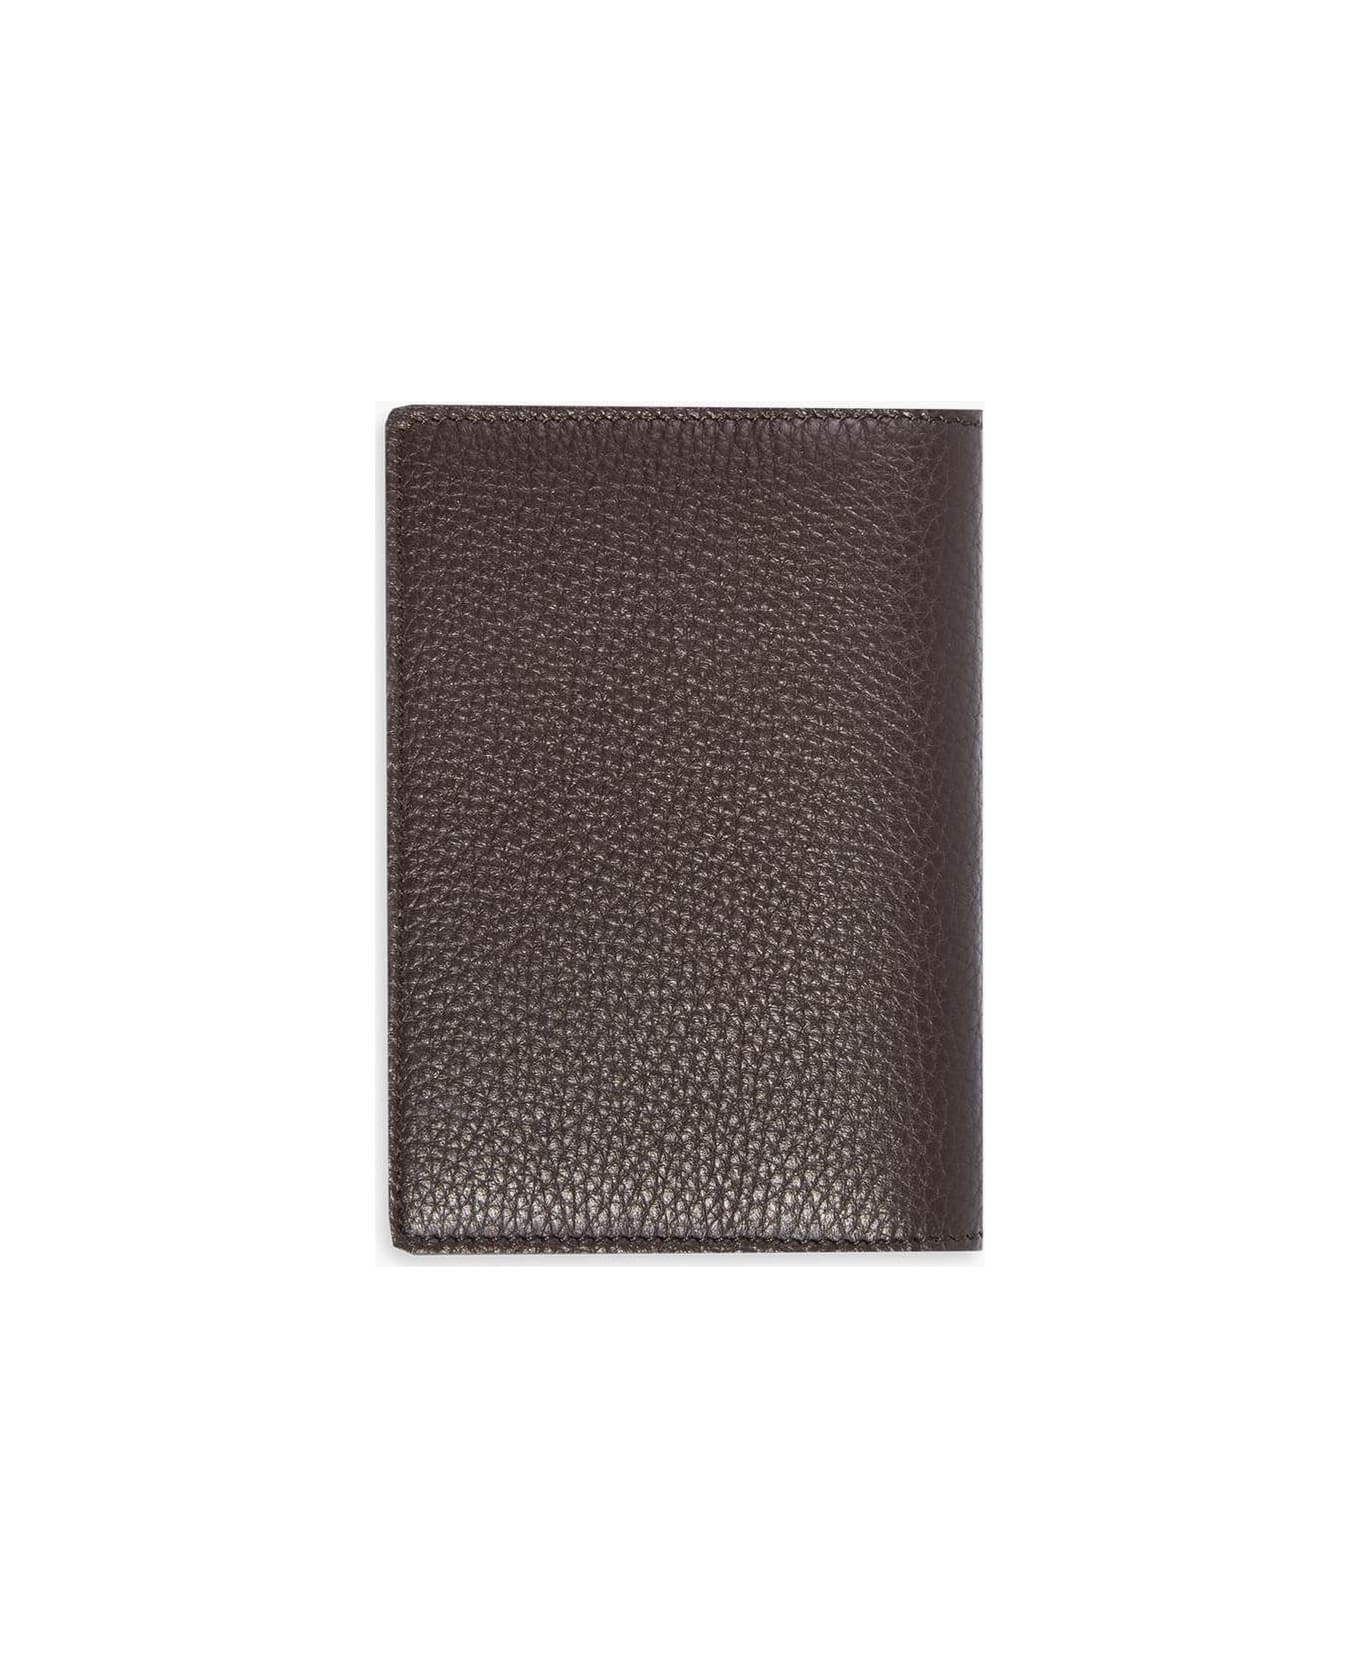 Larusmiani Passport Cover 'fiumicino' Wallet - Chocolate